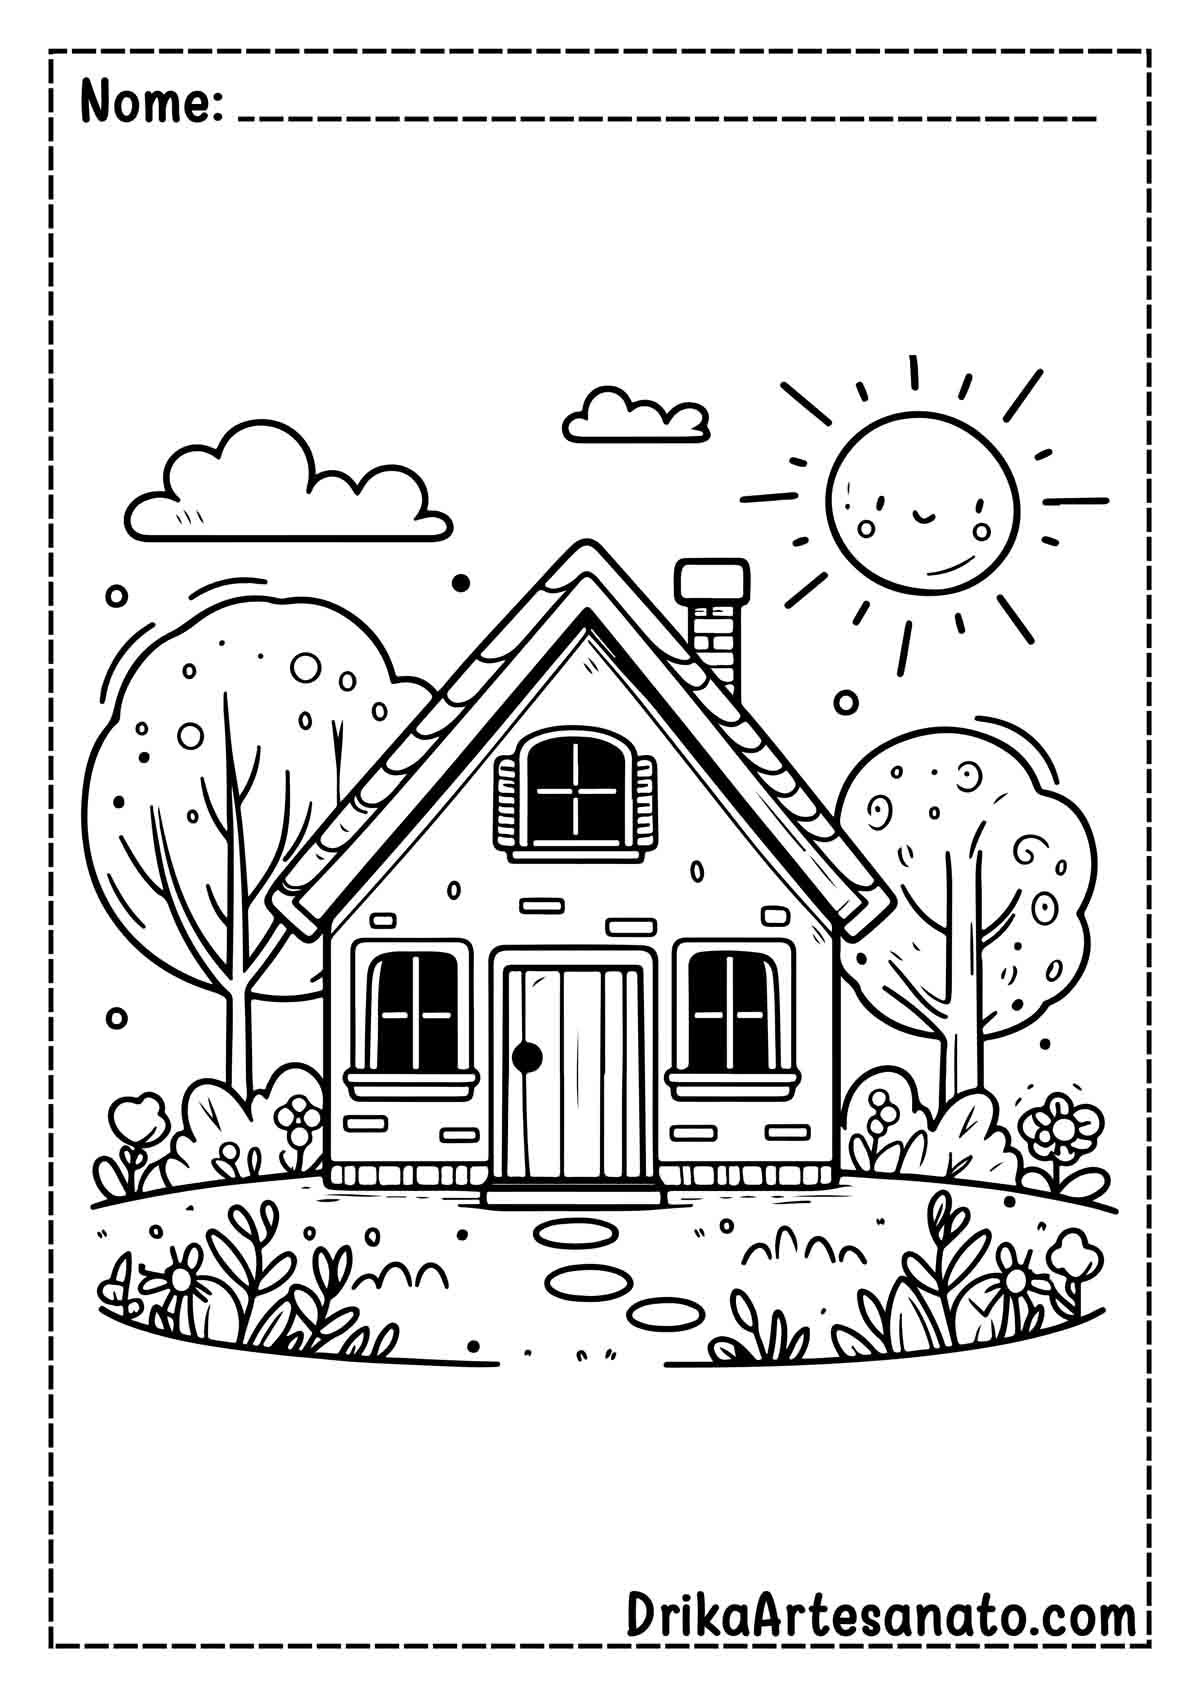 Desenho de Casa Infantil para Imprimir